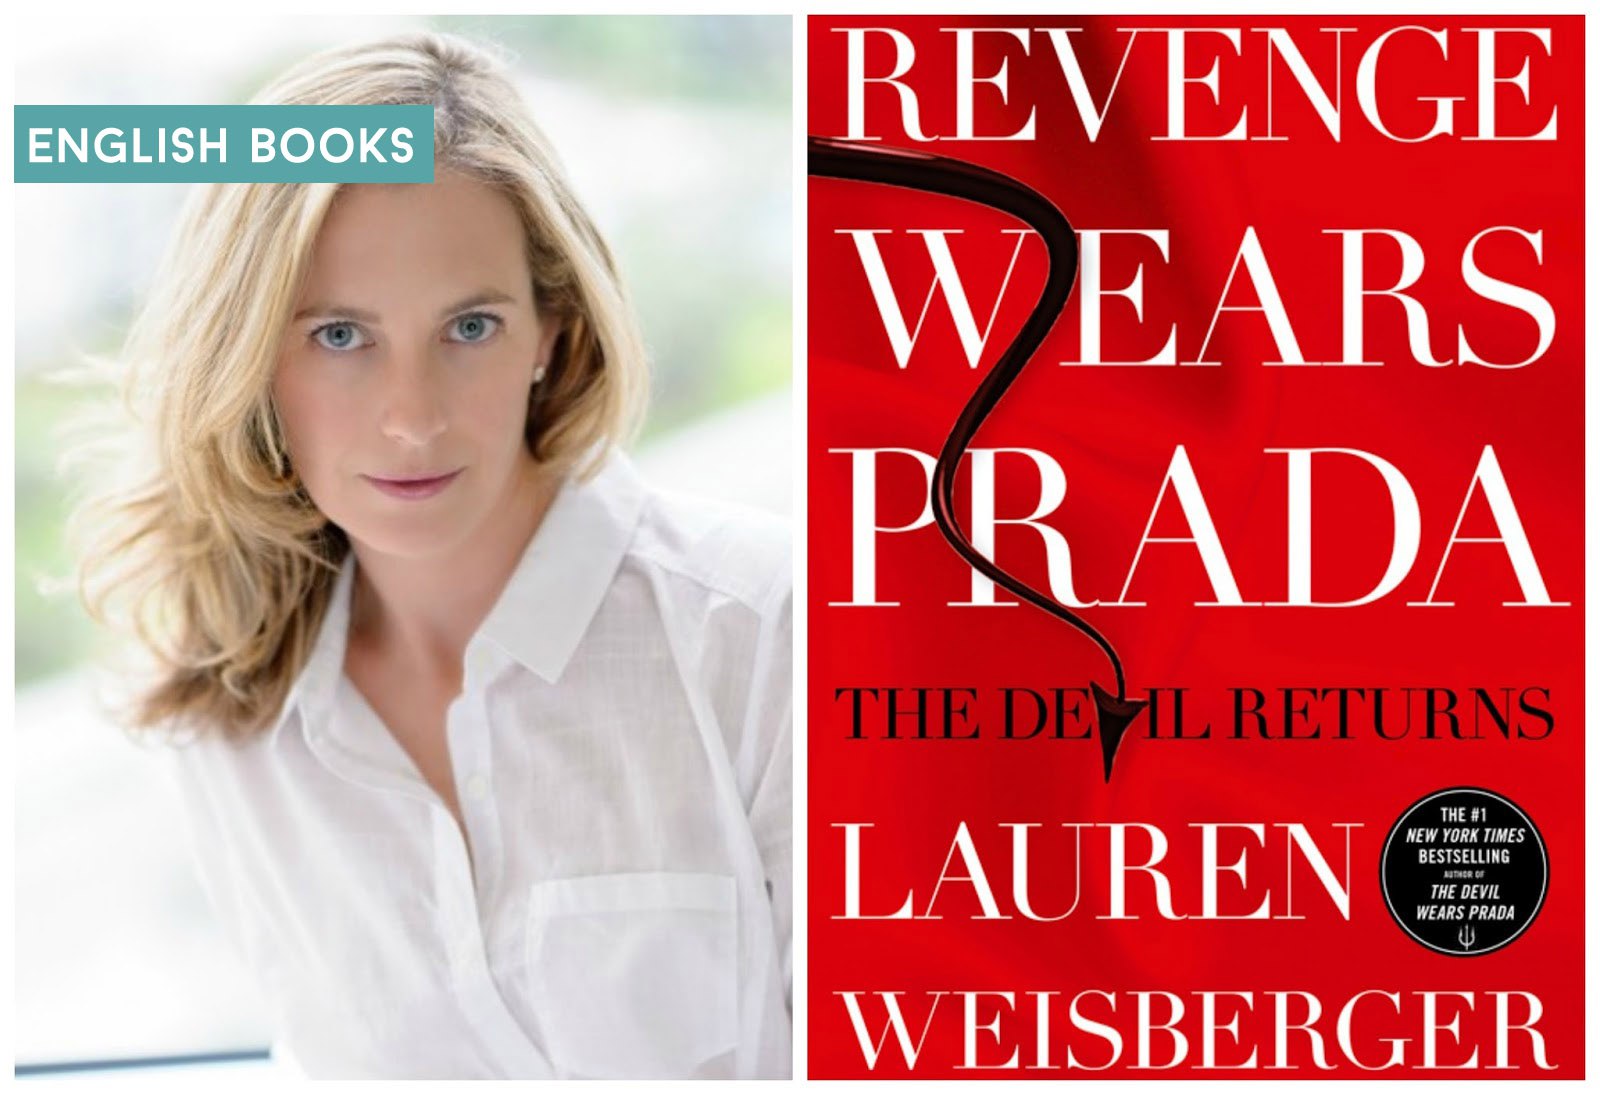 Lauren Weisberger — The Devil Wears Prada